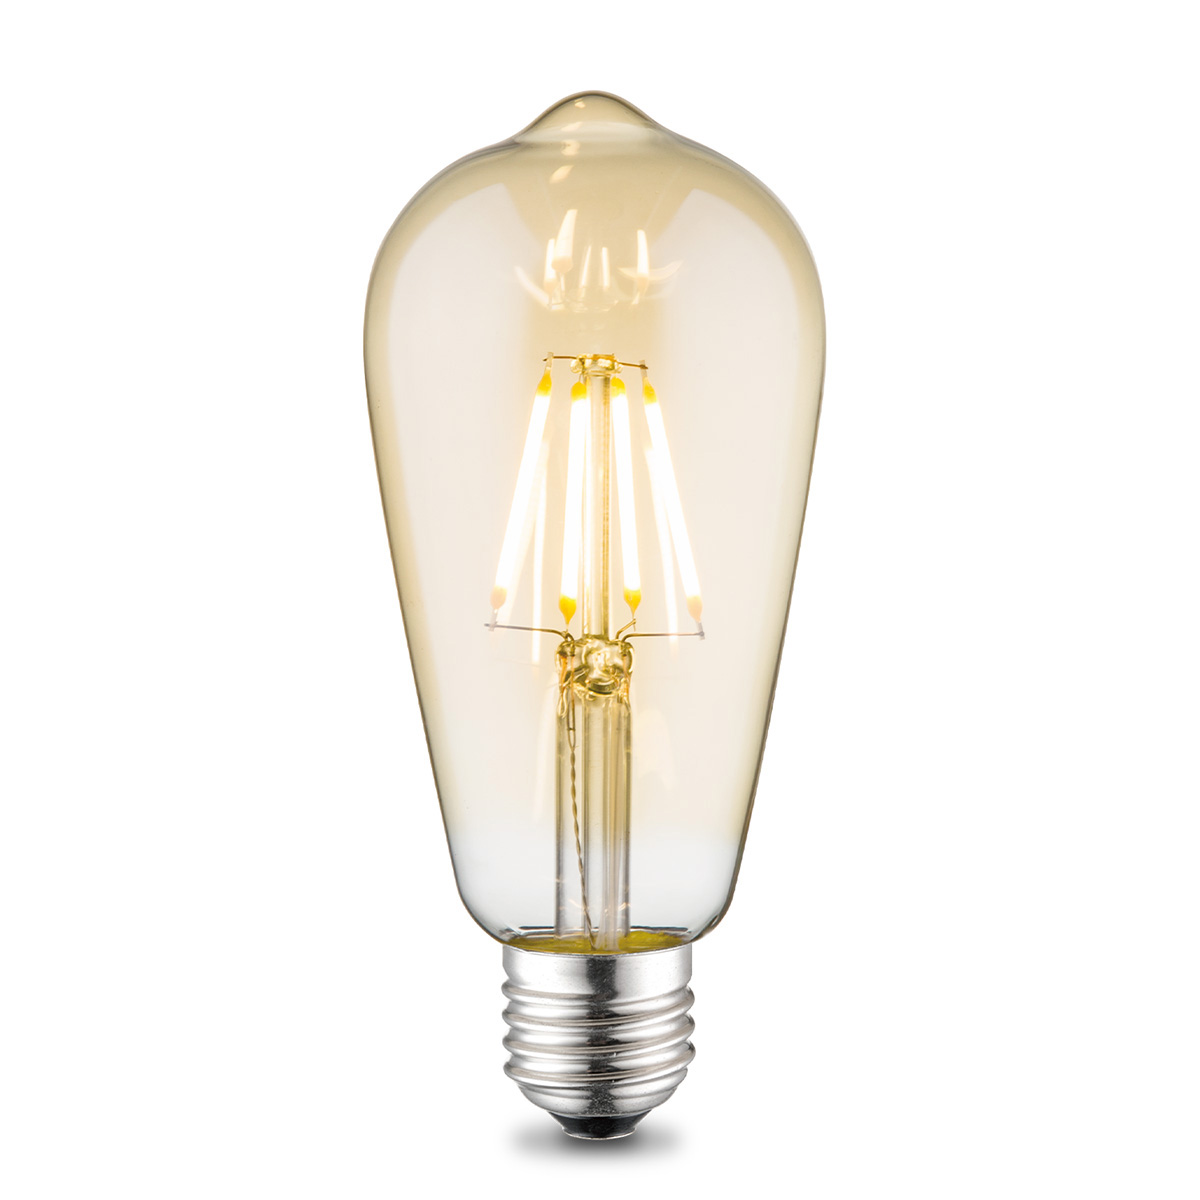 Tangla lighting - TLB-8001-06AM - LED Light Bulb Deco filament - ST64 6W amber - dimmable - E27